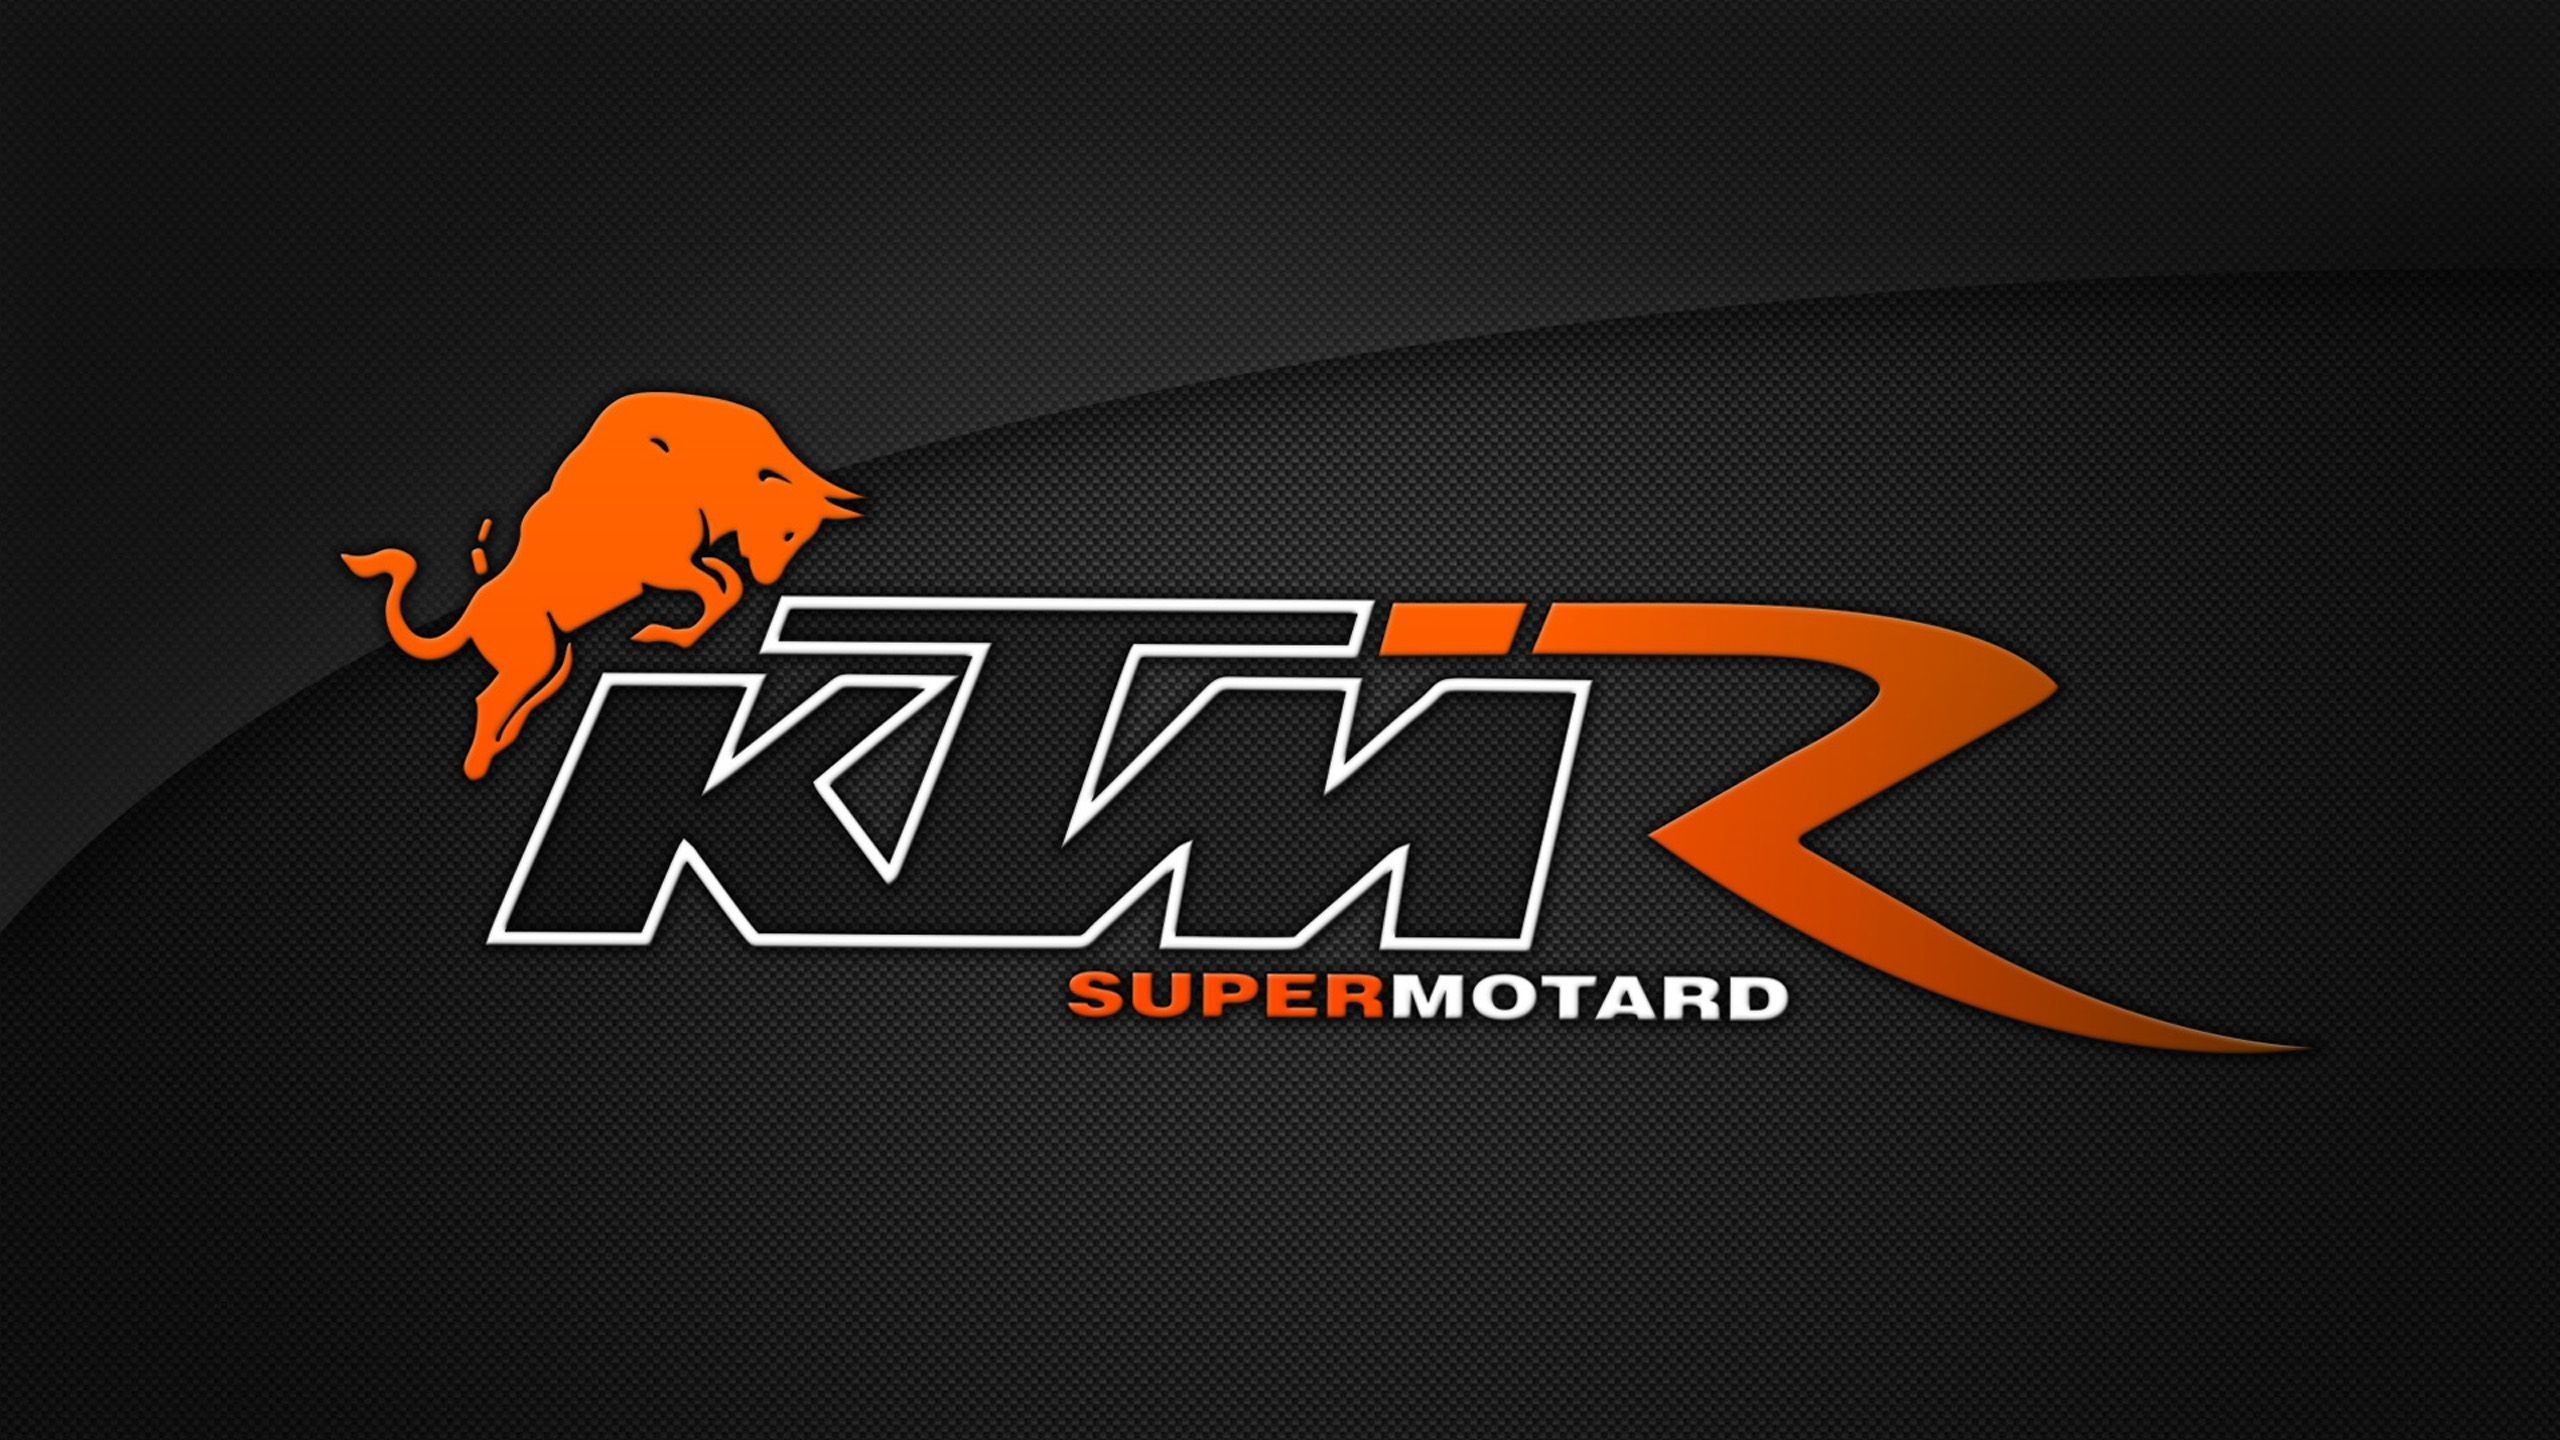 KTM Logo Wallpaper HDdownload KTM Logo Wallpaper HD 2560x1440